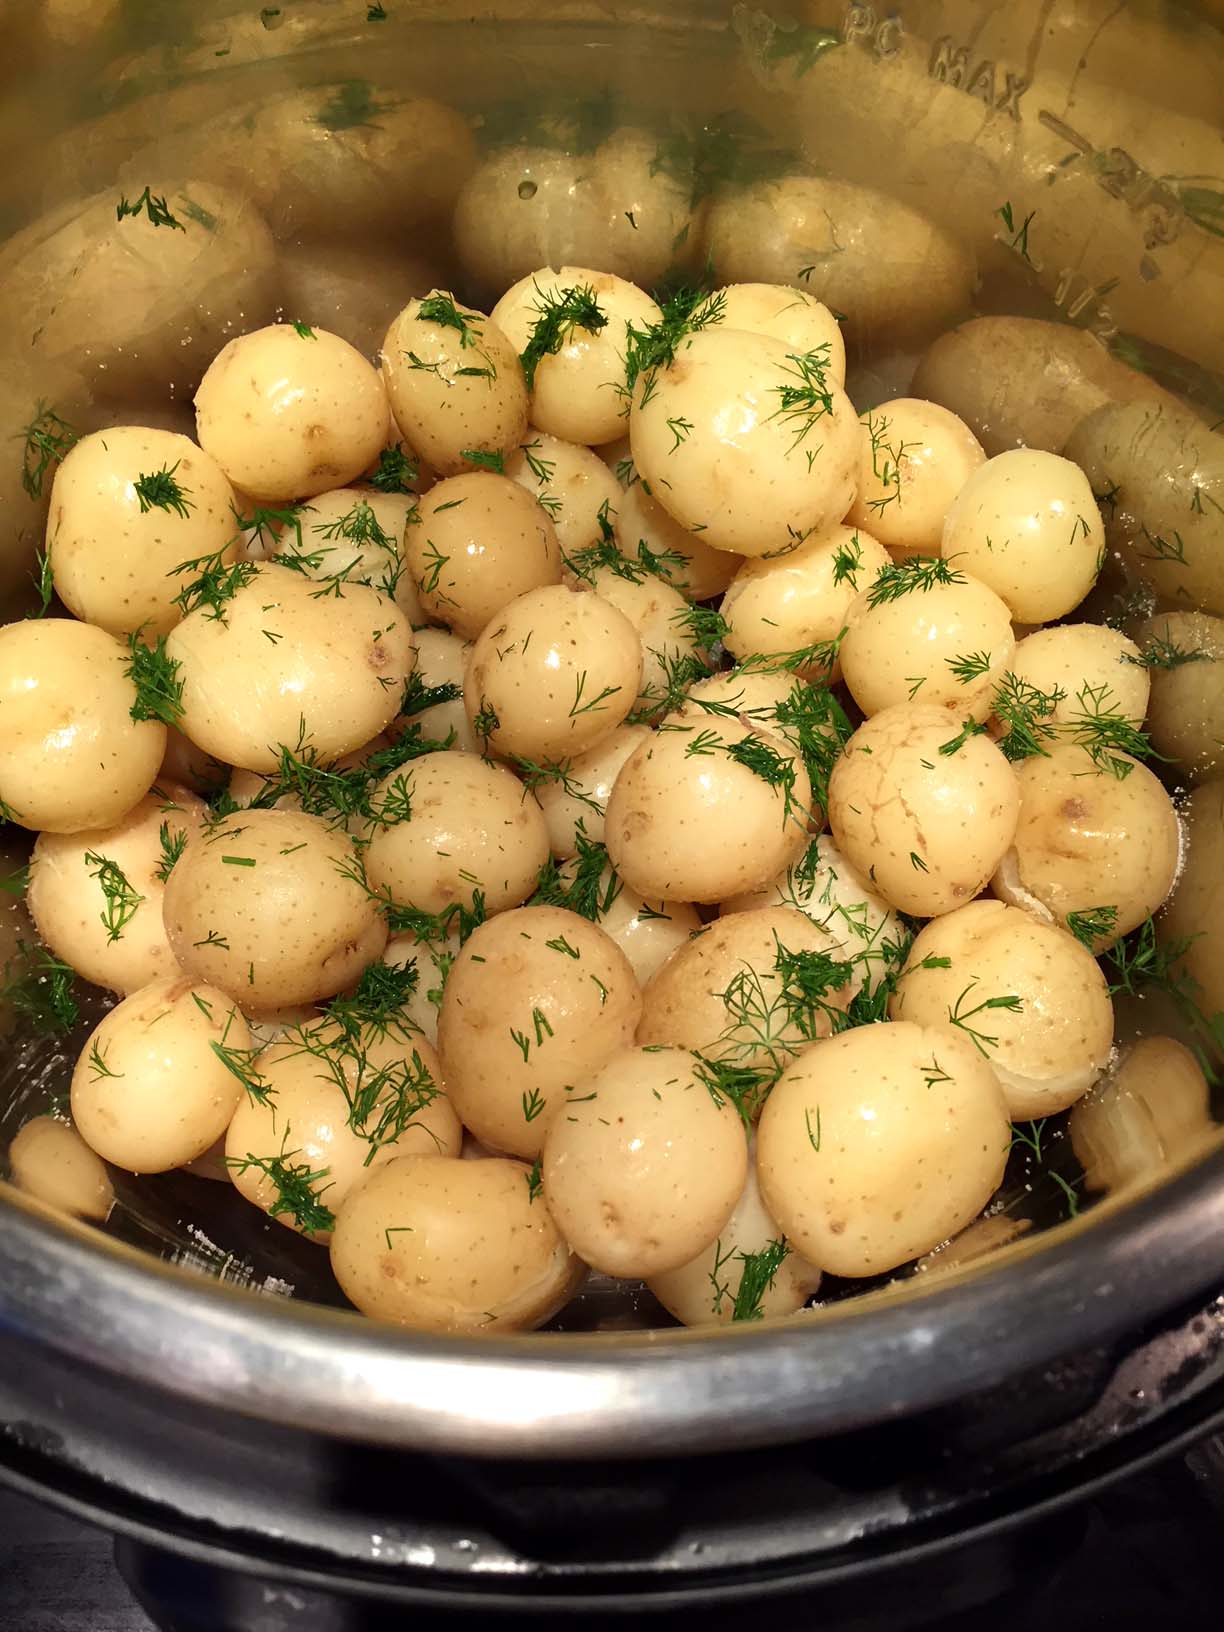 Very Small Potatoes